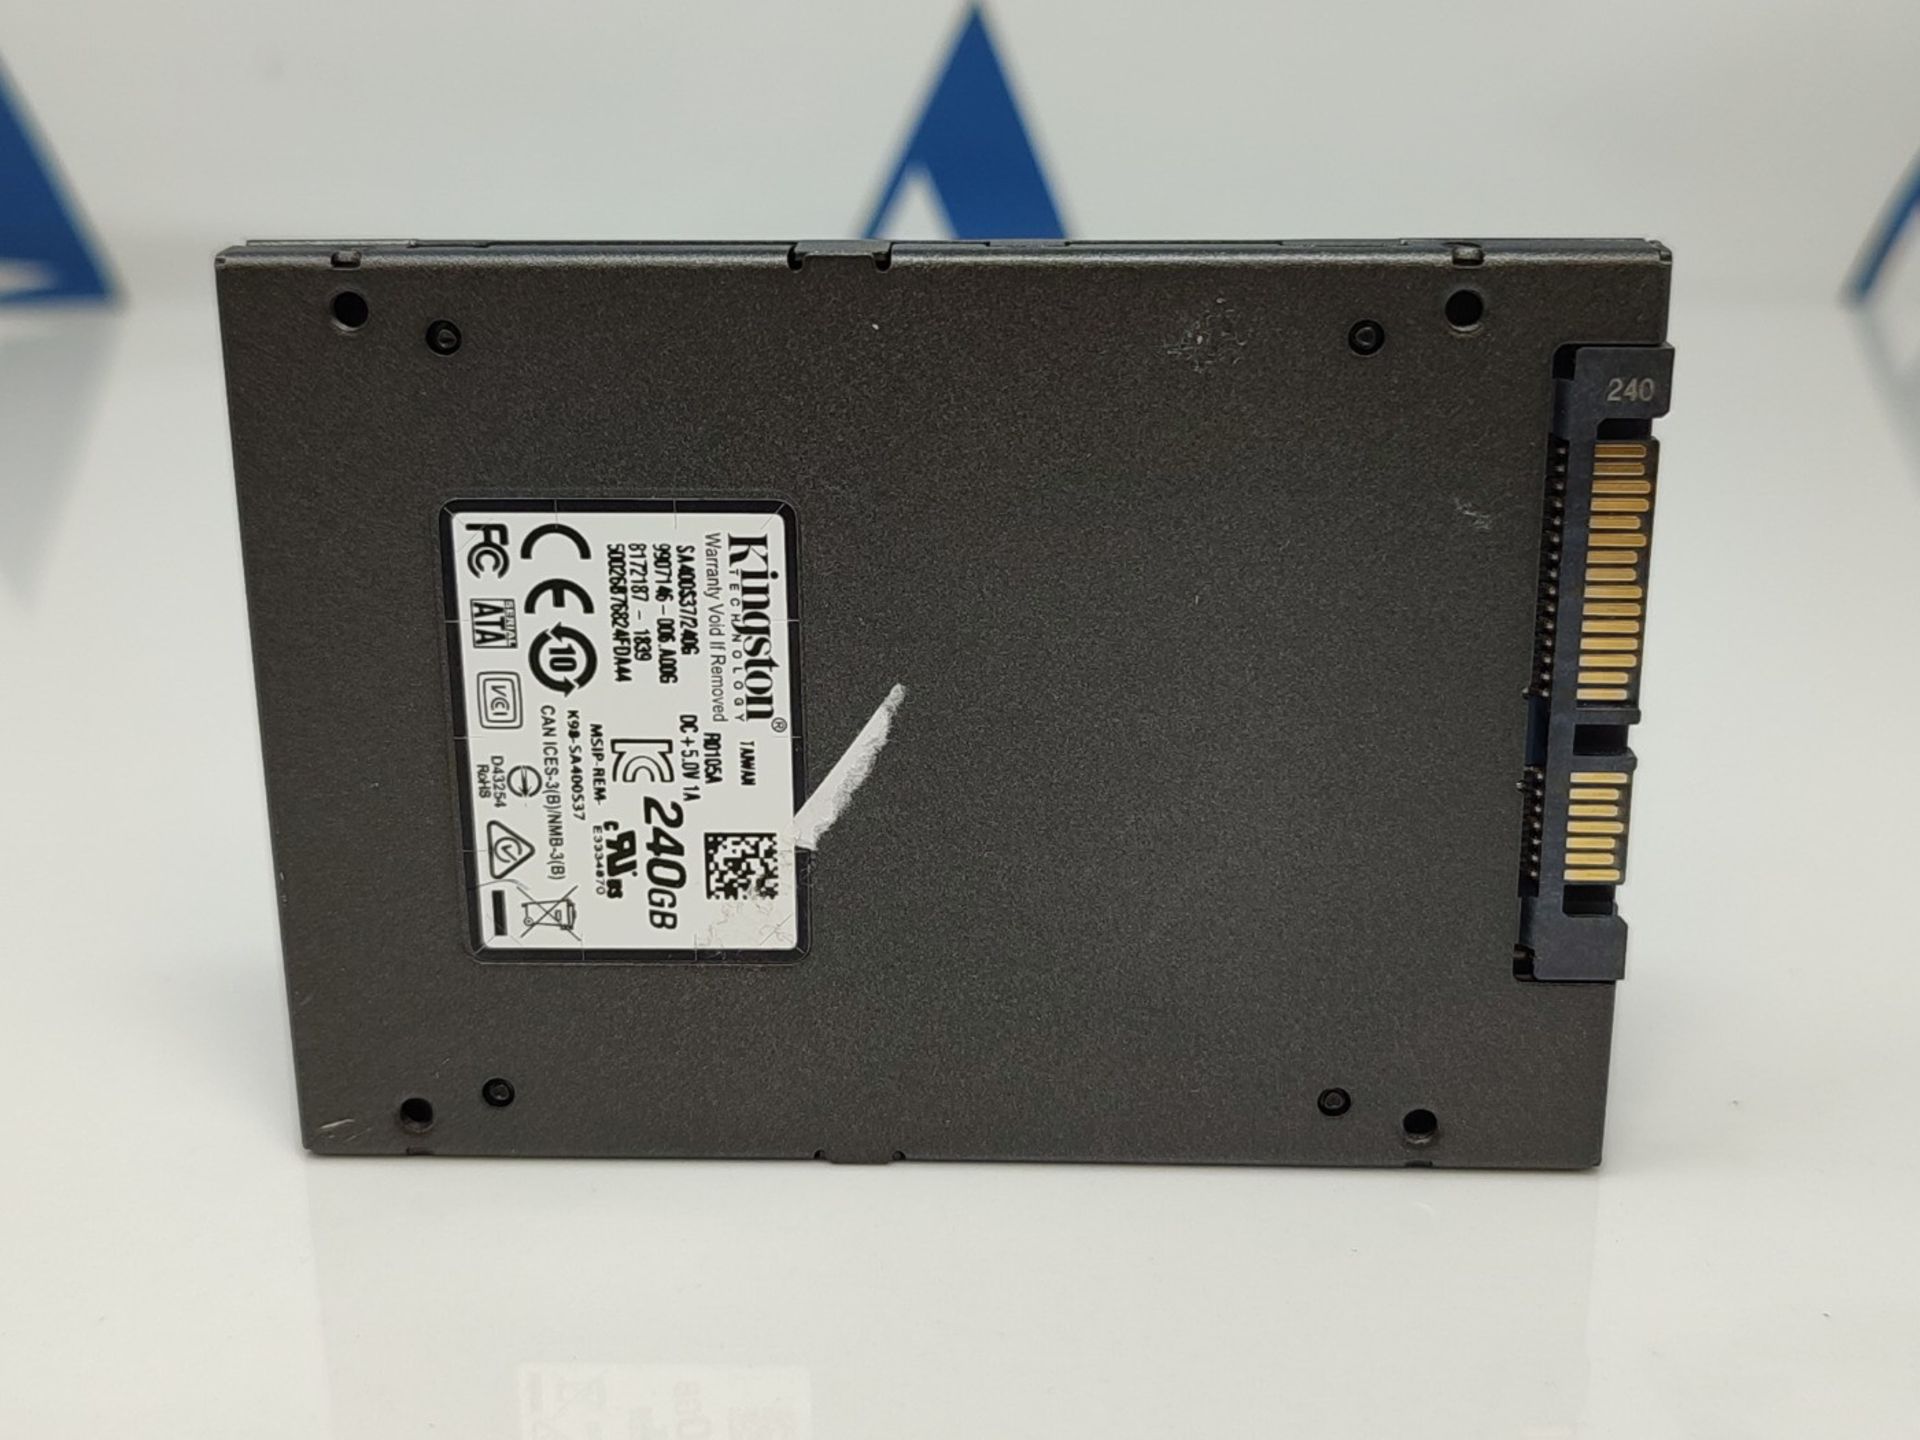 Kingston A400 SSD Interne SSD 2.5" SATA Rev 3.0, 240GB - SA400S37/240G - Image 3 of 3